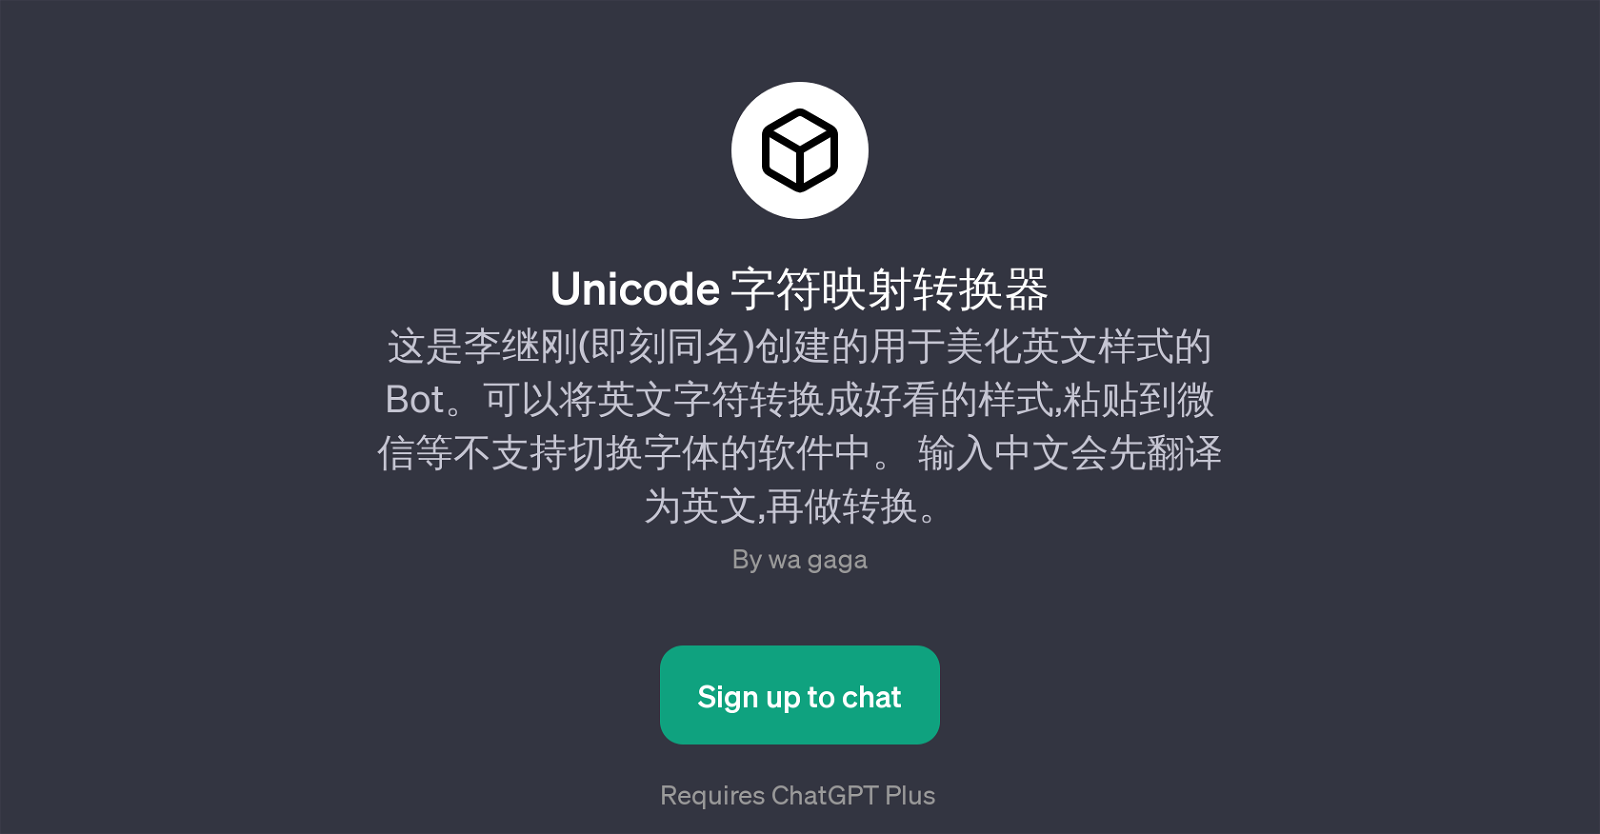 Unicode website